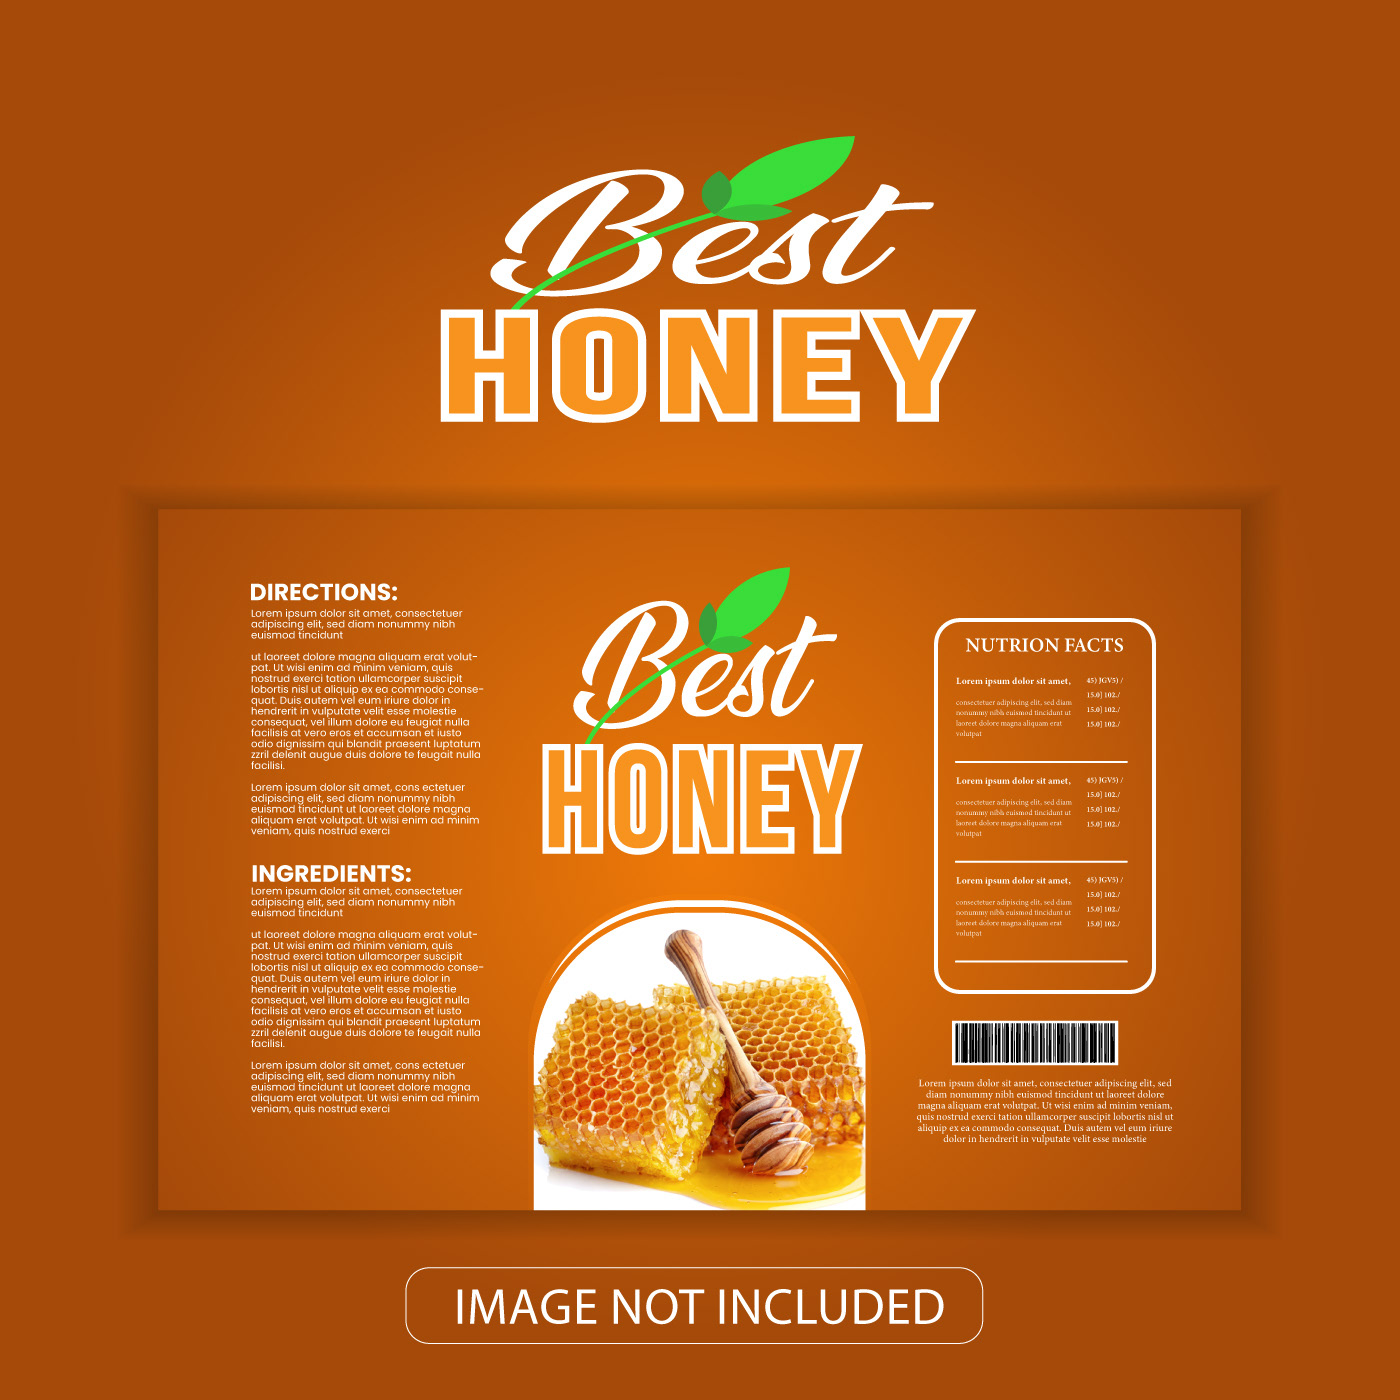 Honey Jar Label product design  Packaging Advertising  marketing   visual identity jar label product packaging design Best Honey Jar